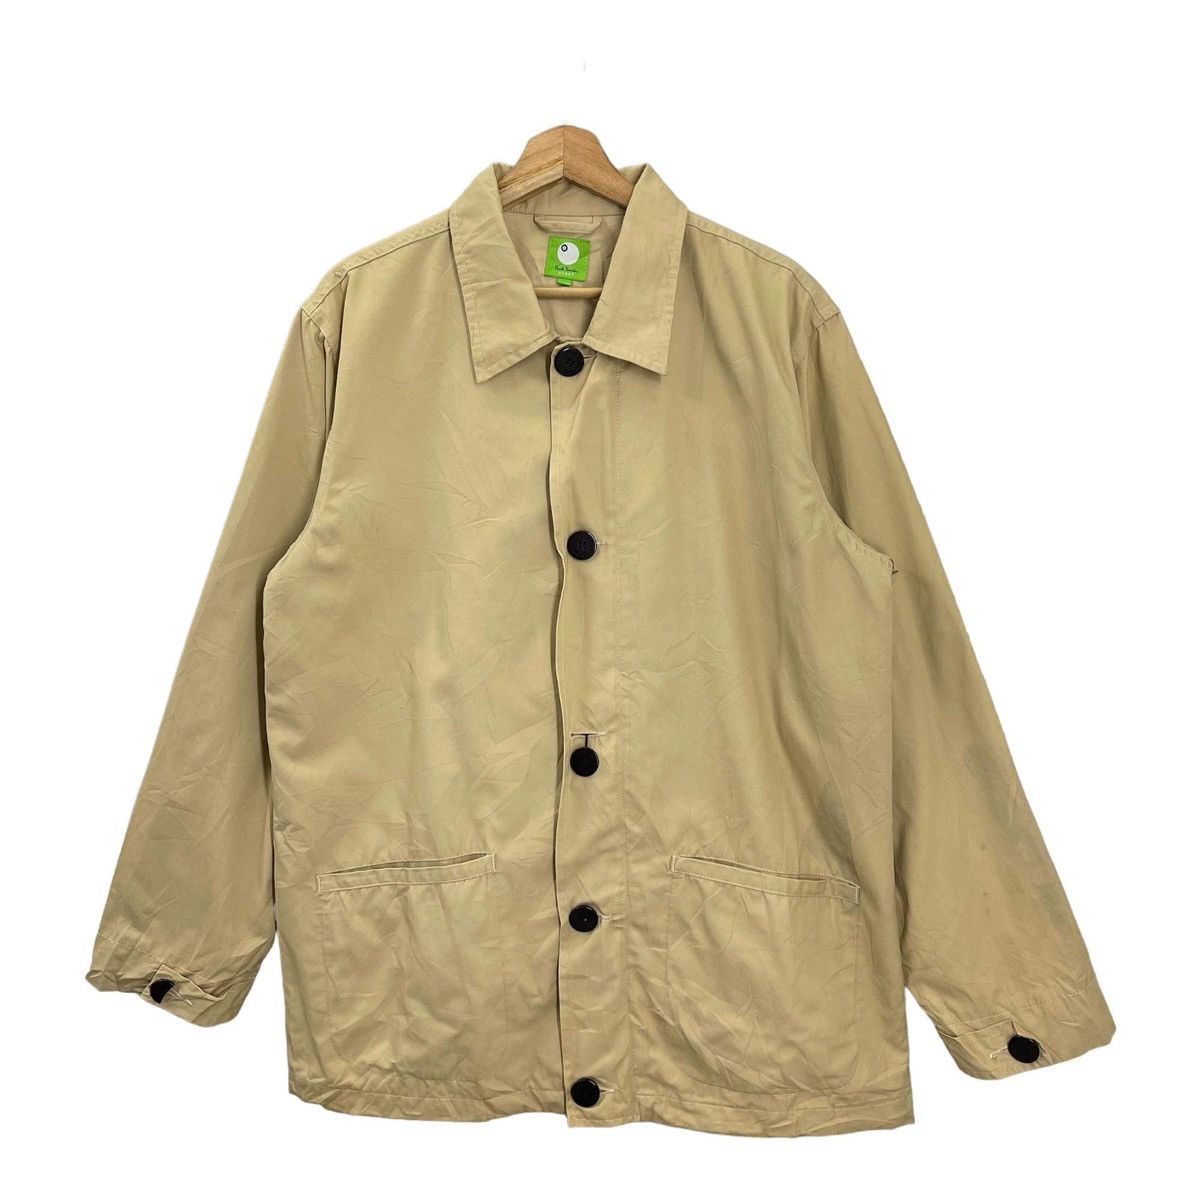 Paul Smith Button Jacket Size M - 3